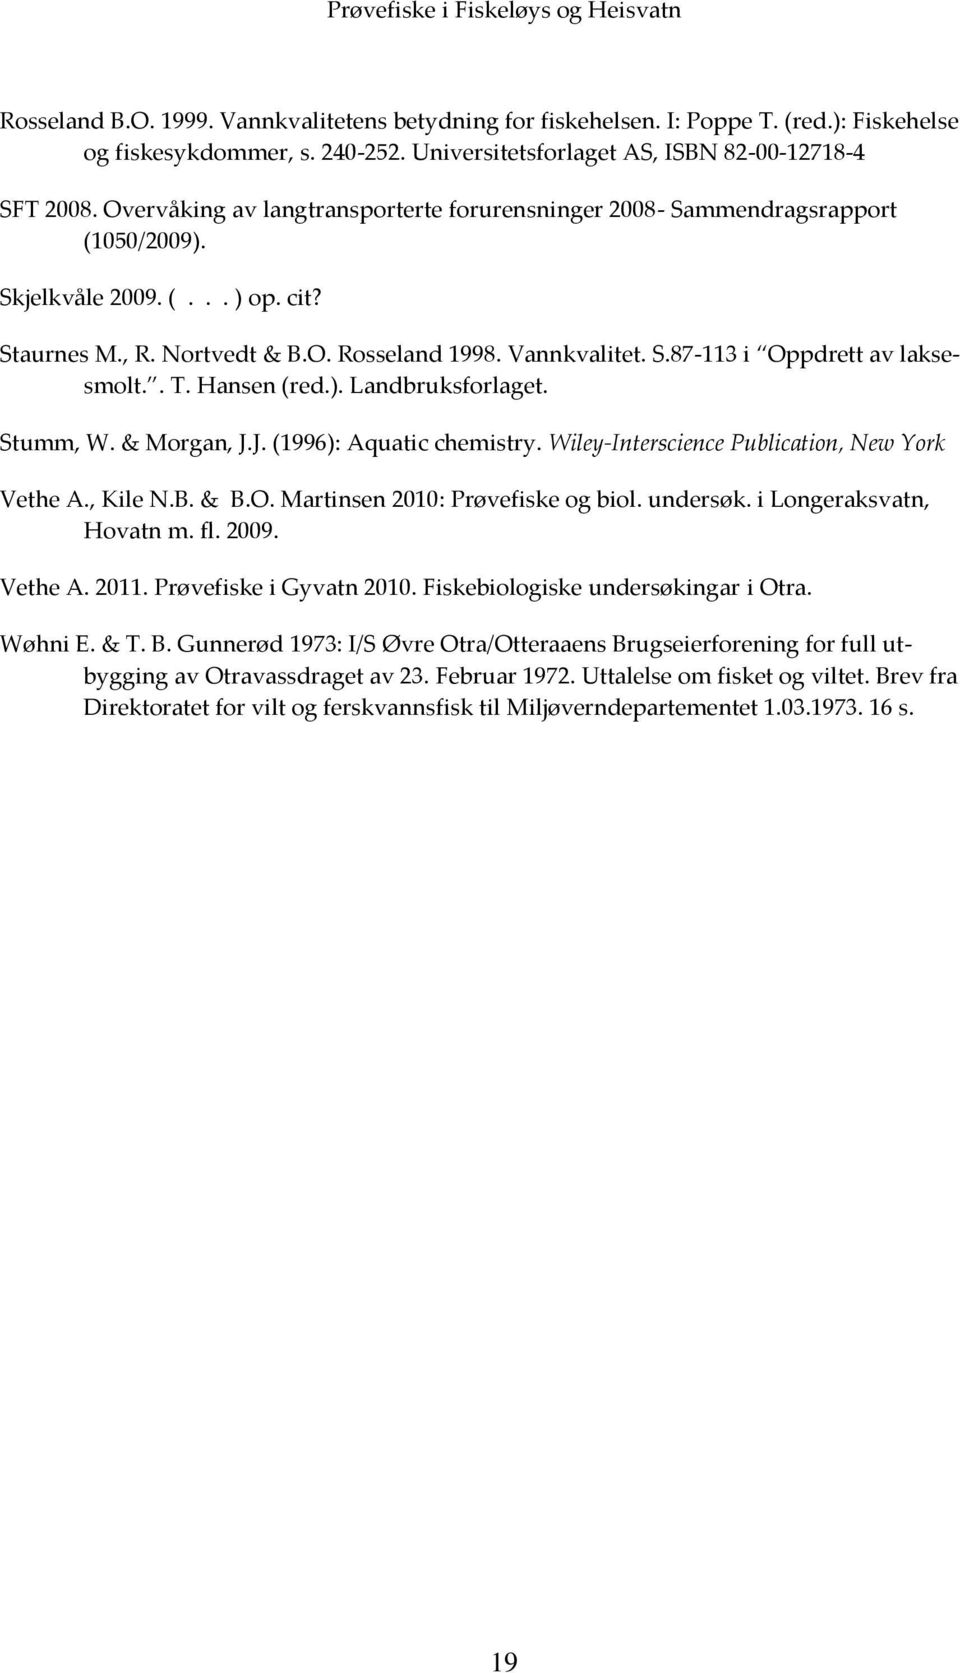 . T. Hansen (red.). Landbruksforlaget. Stumm, W. & Morgan, J.J. (1996): Aquatic chemistry. Wiley-Interscience Publication, New York Vethe A., Kile N.B. & B.O. Martinsen 2010: Prøvefiske og biol.